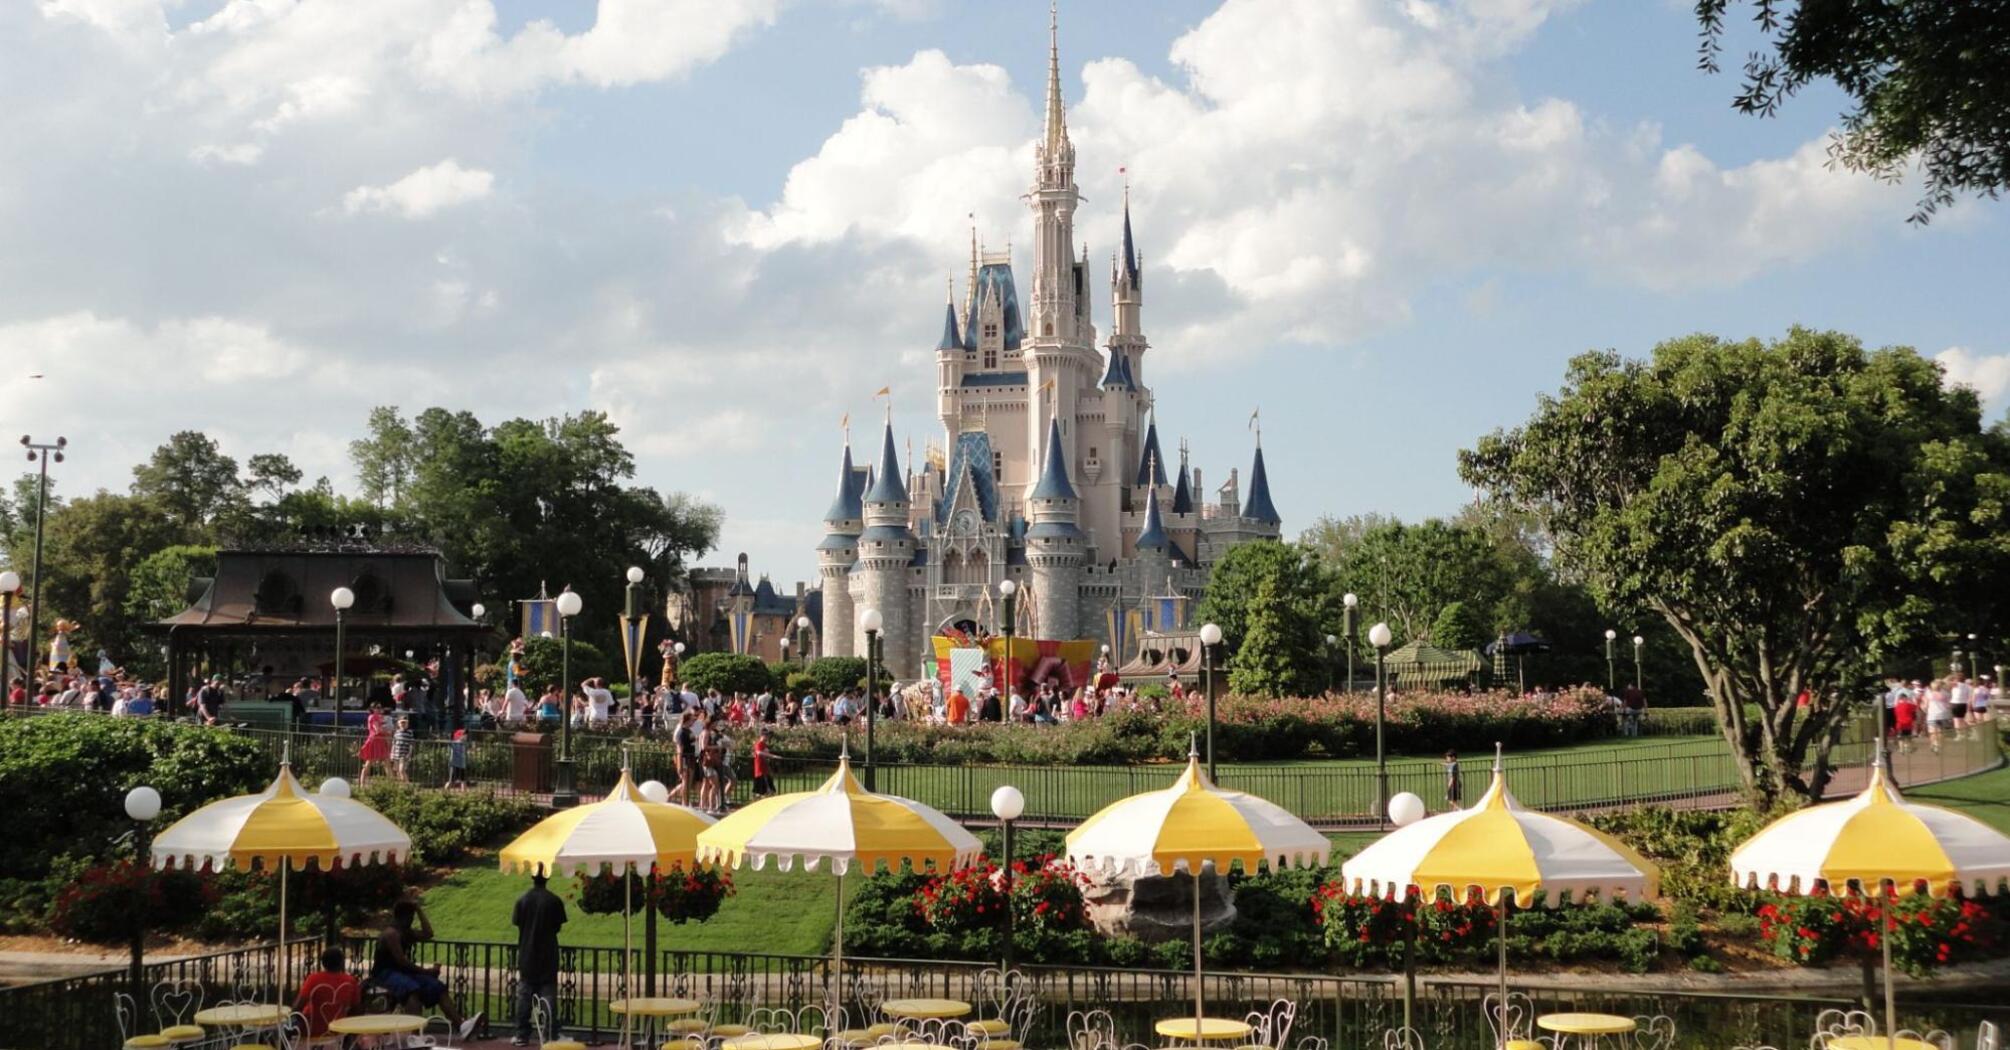 Cinderella's Castle at the Magic Kingdom at Walt Disney World in Orlando, Florida